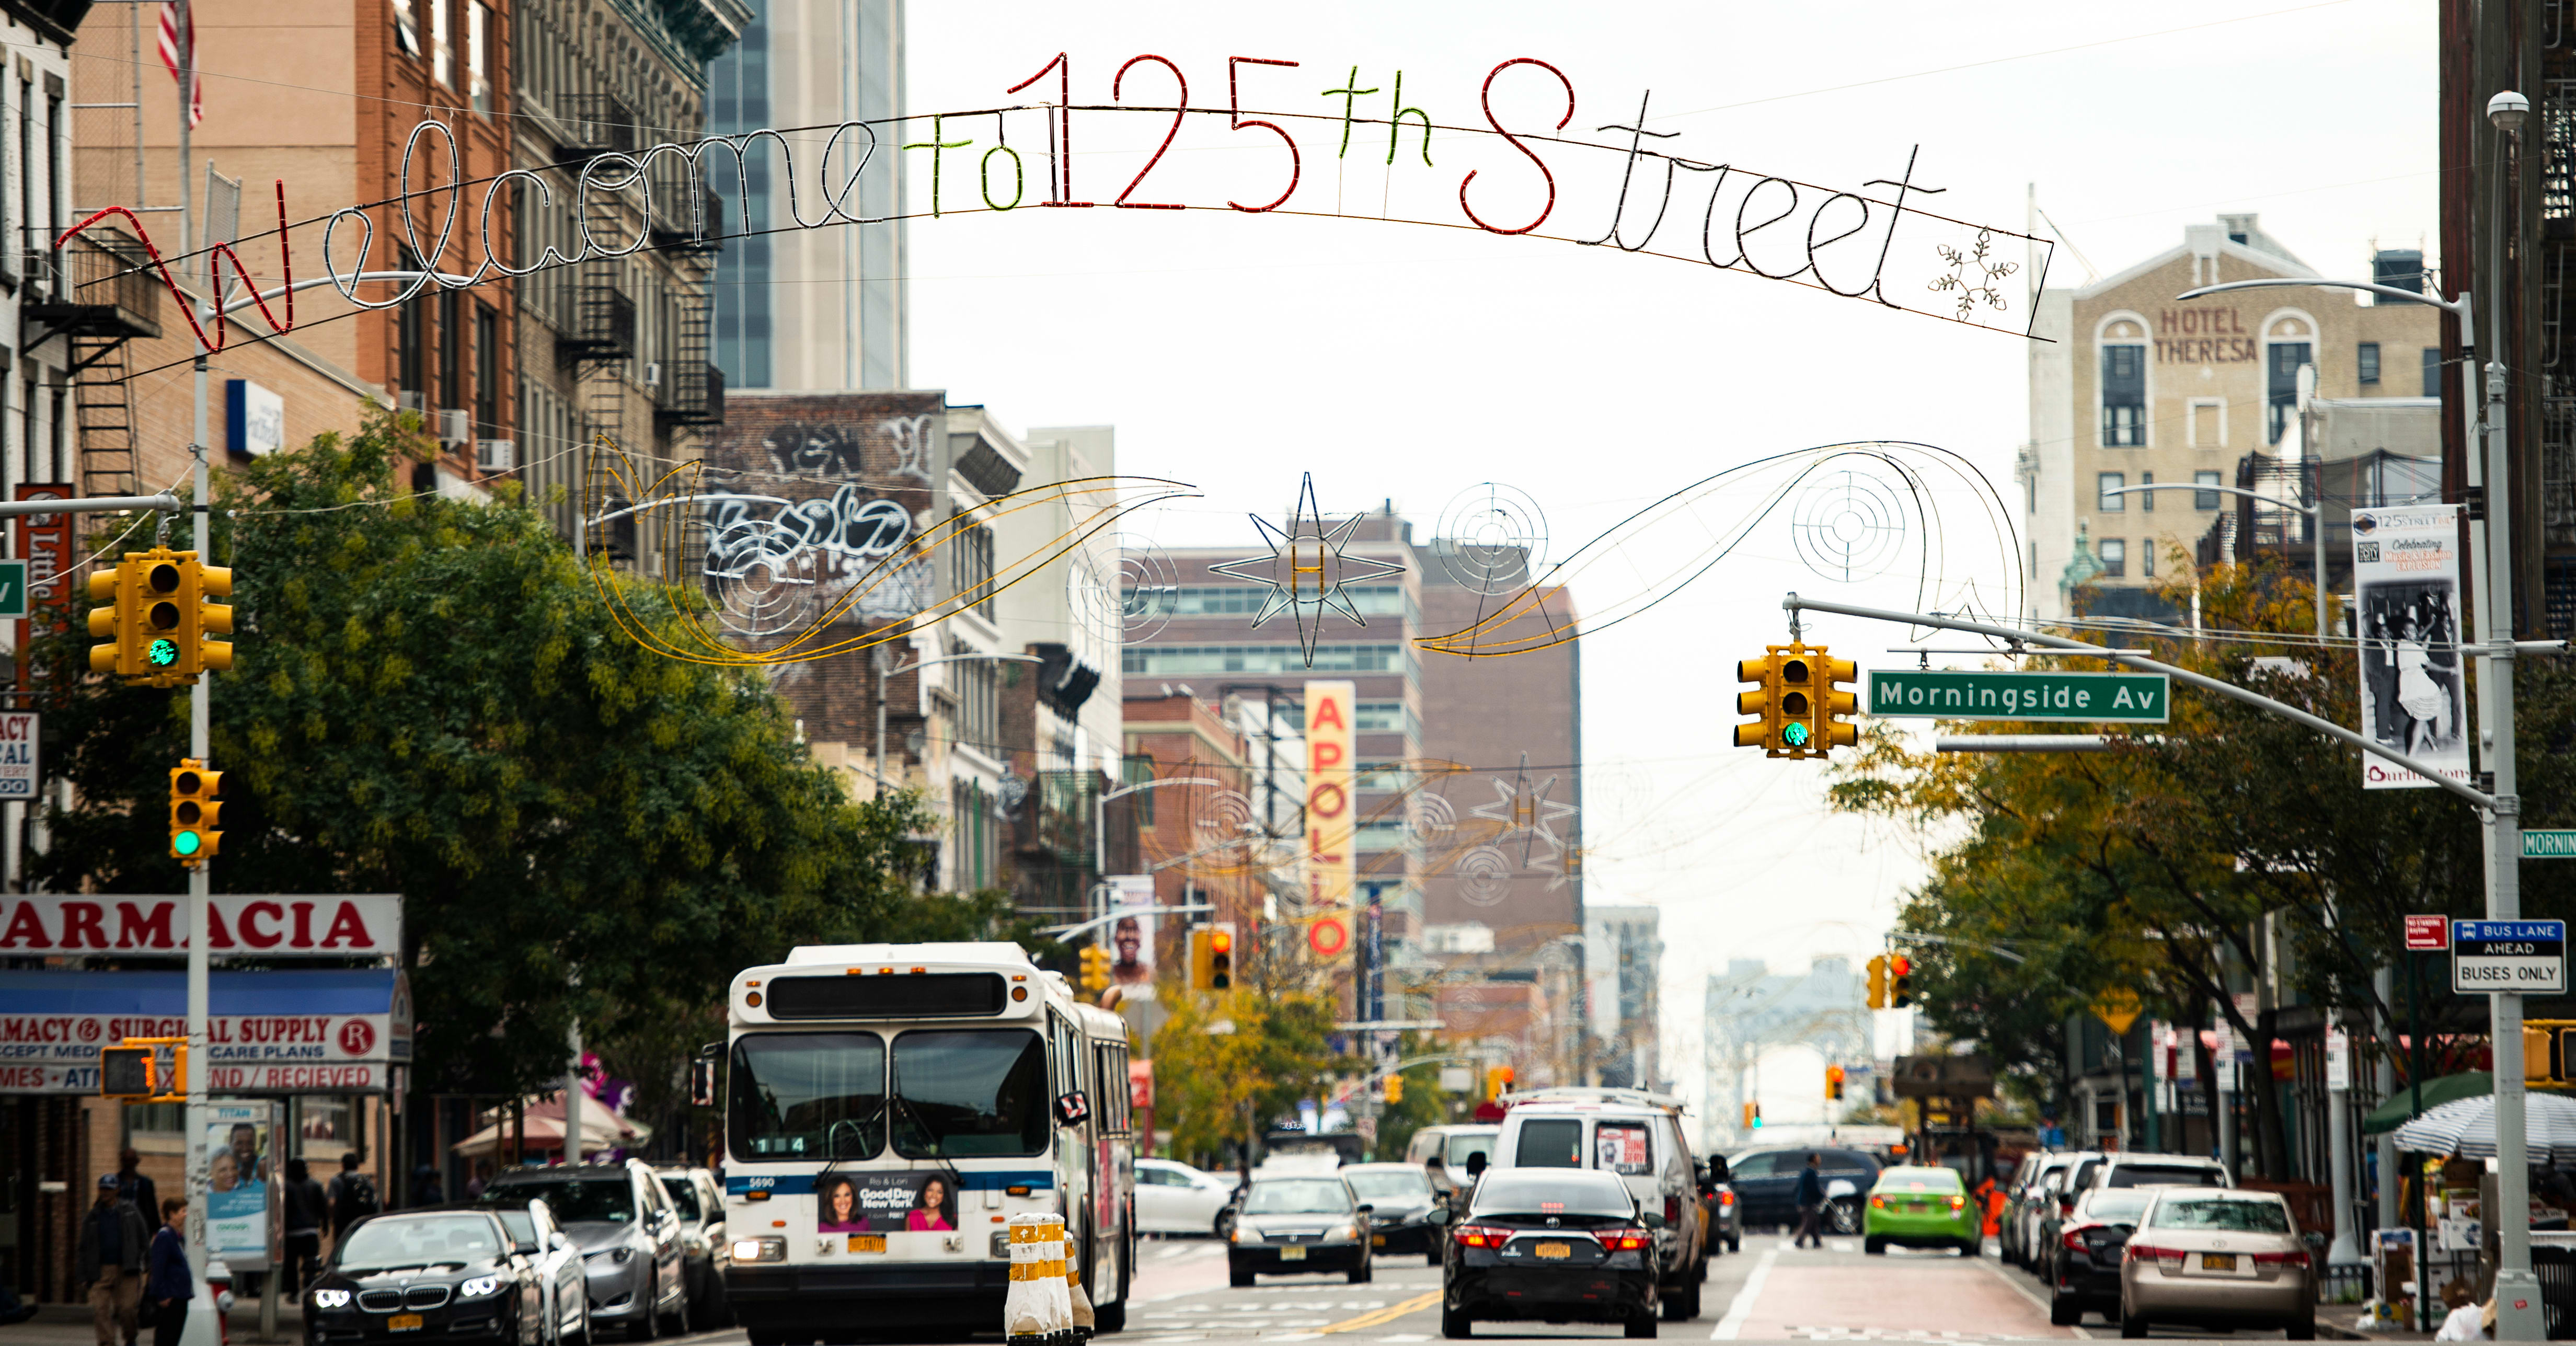 Image of City, Metropolis, Urban, Neighborhood, Road, Car, Vehicle, Light, Traffic Light, Person, Bus, Street, 